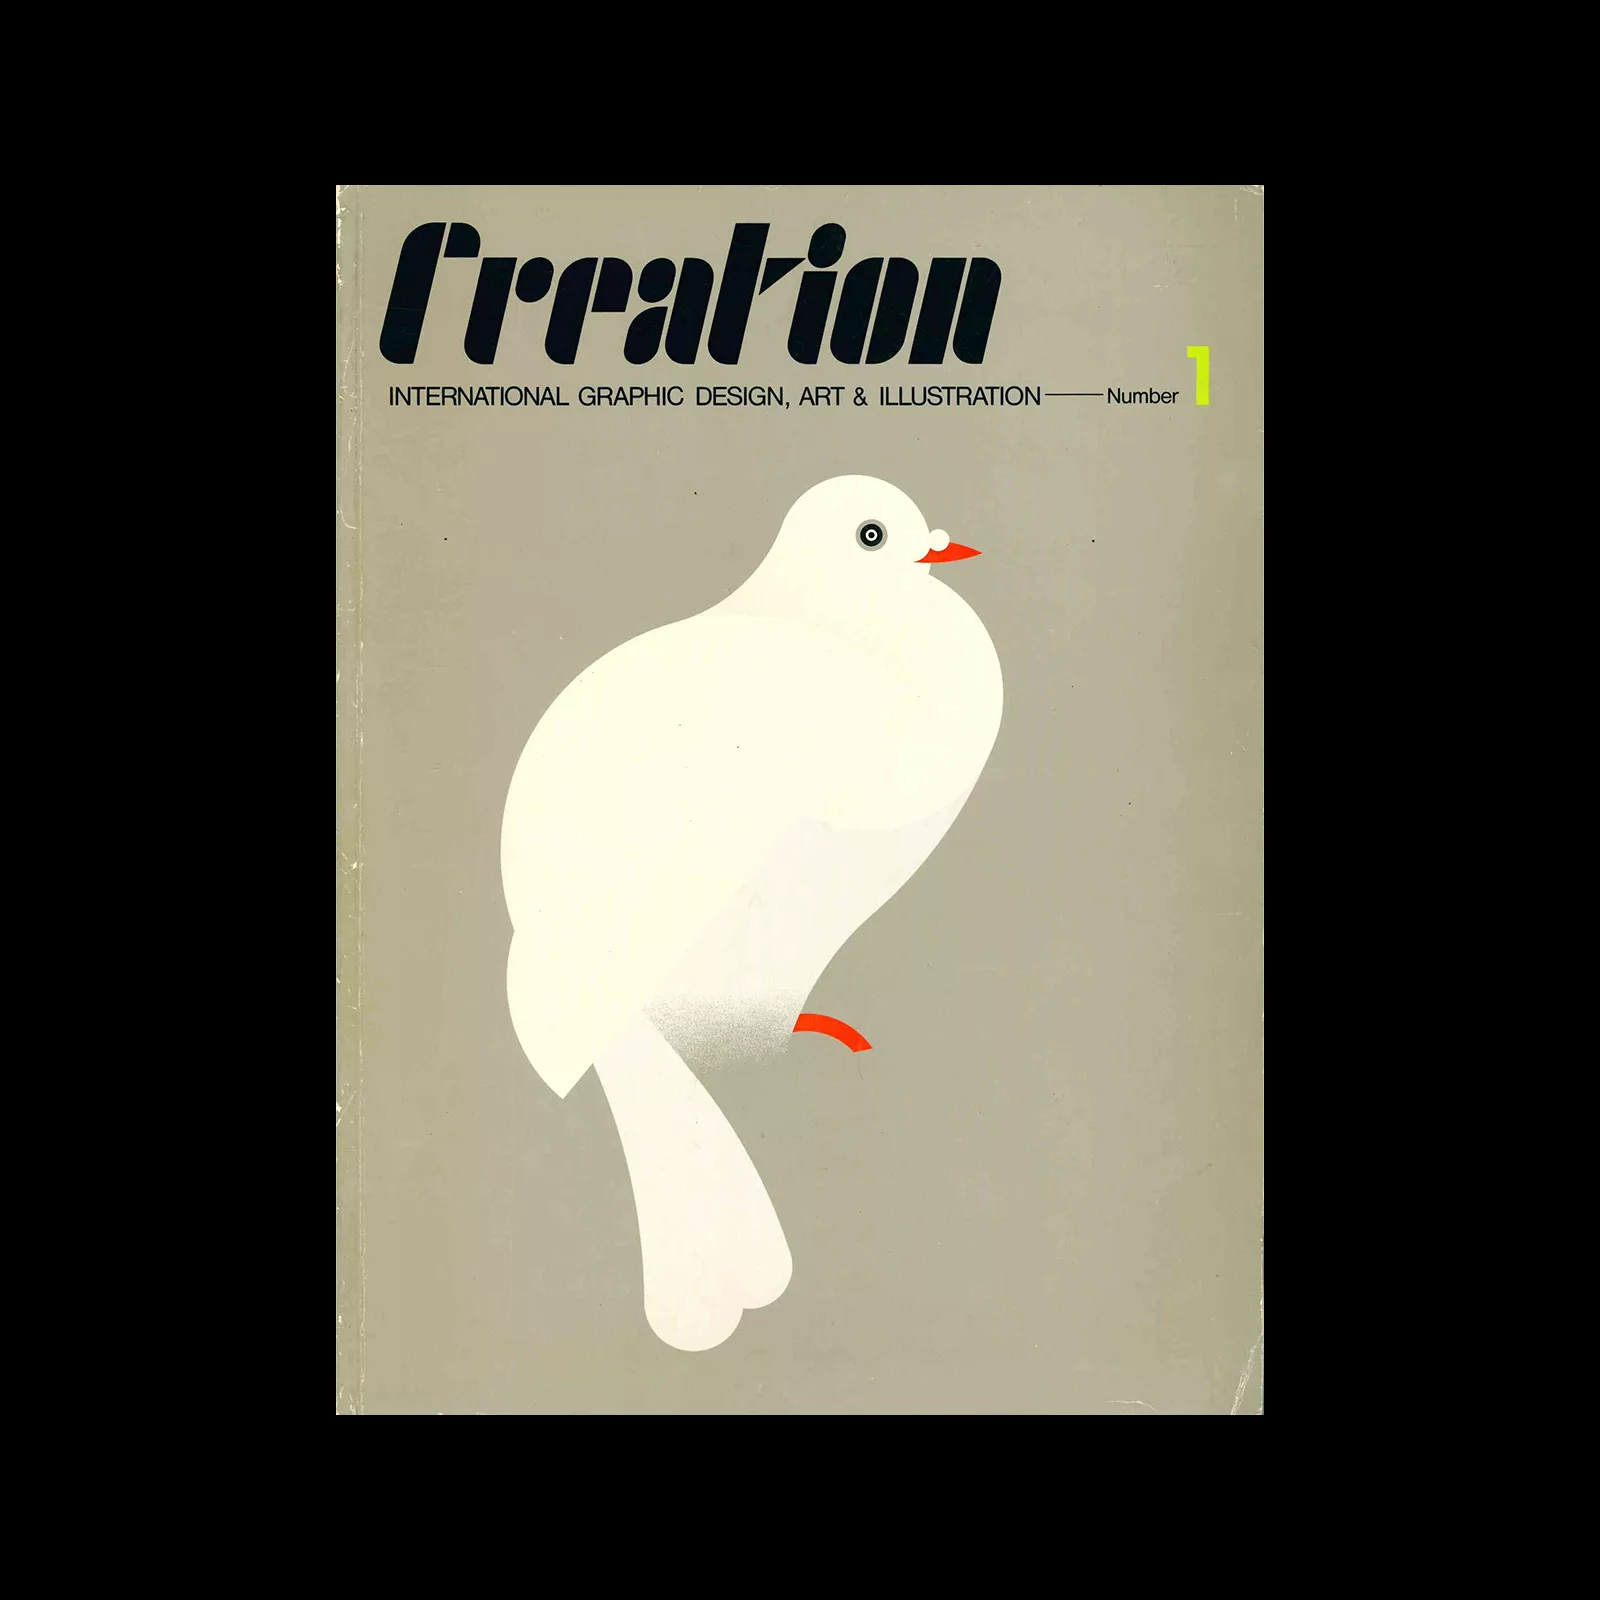 CREATION no. 1 (International Graphic Design, Art and Illustration), 1989. Cover illustration by Ikko Tanaka